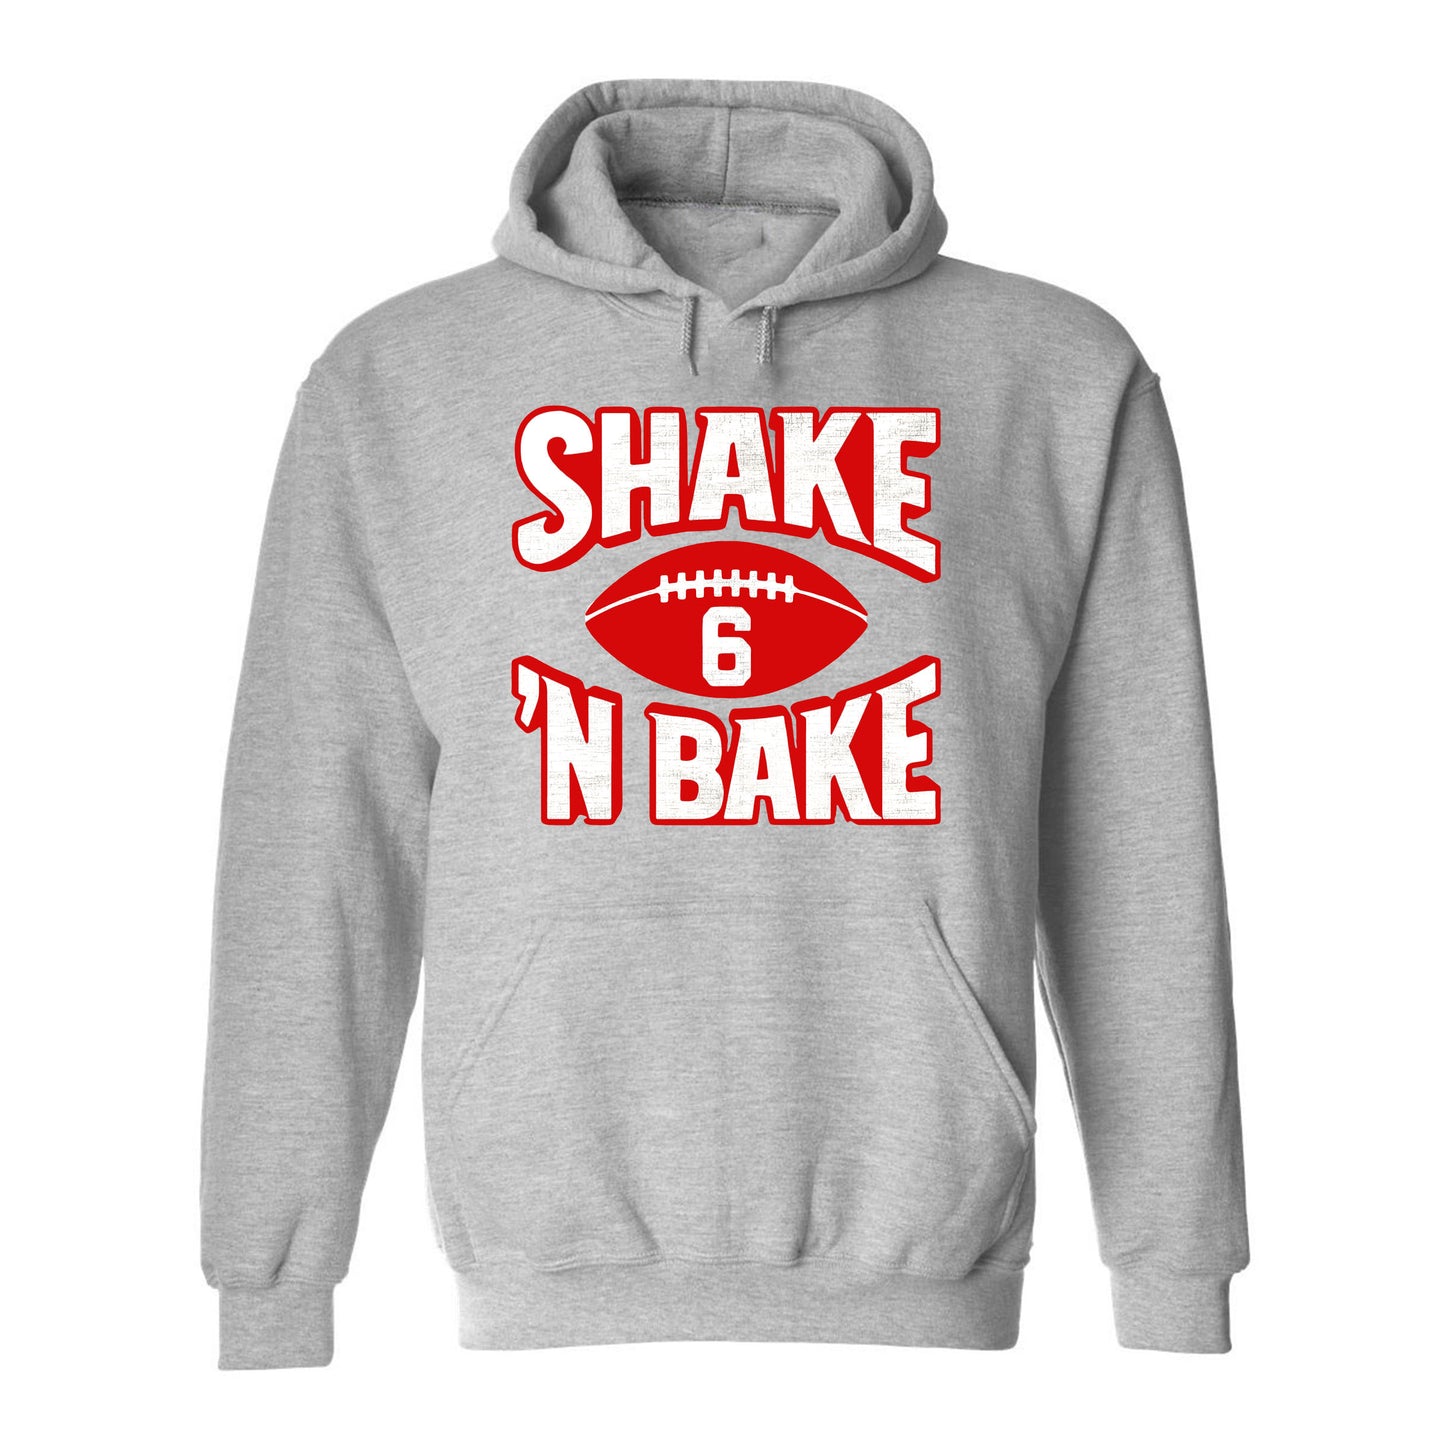 Shake N Bake T-Shirt for TB Football Fans